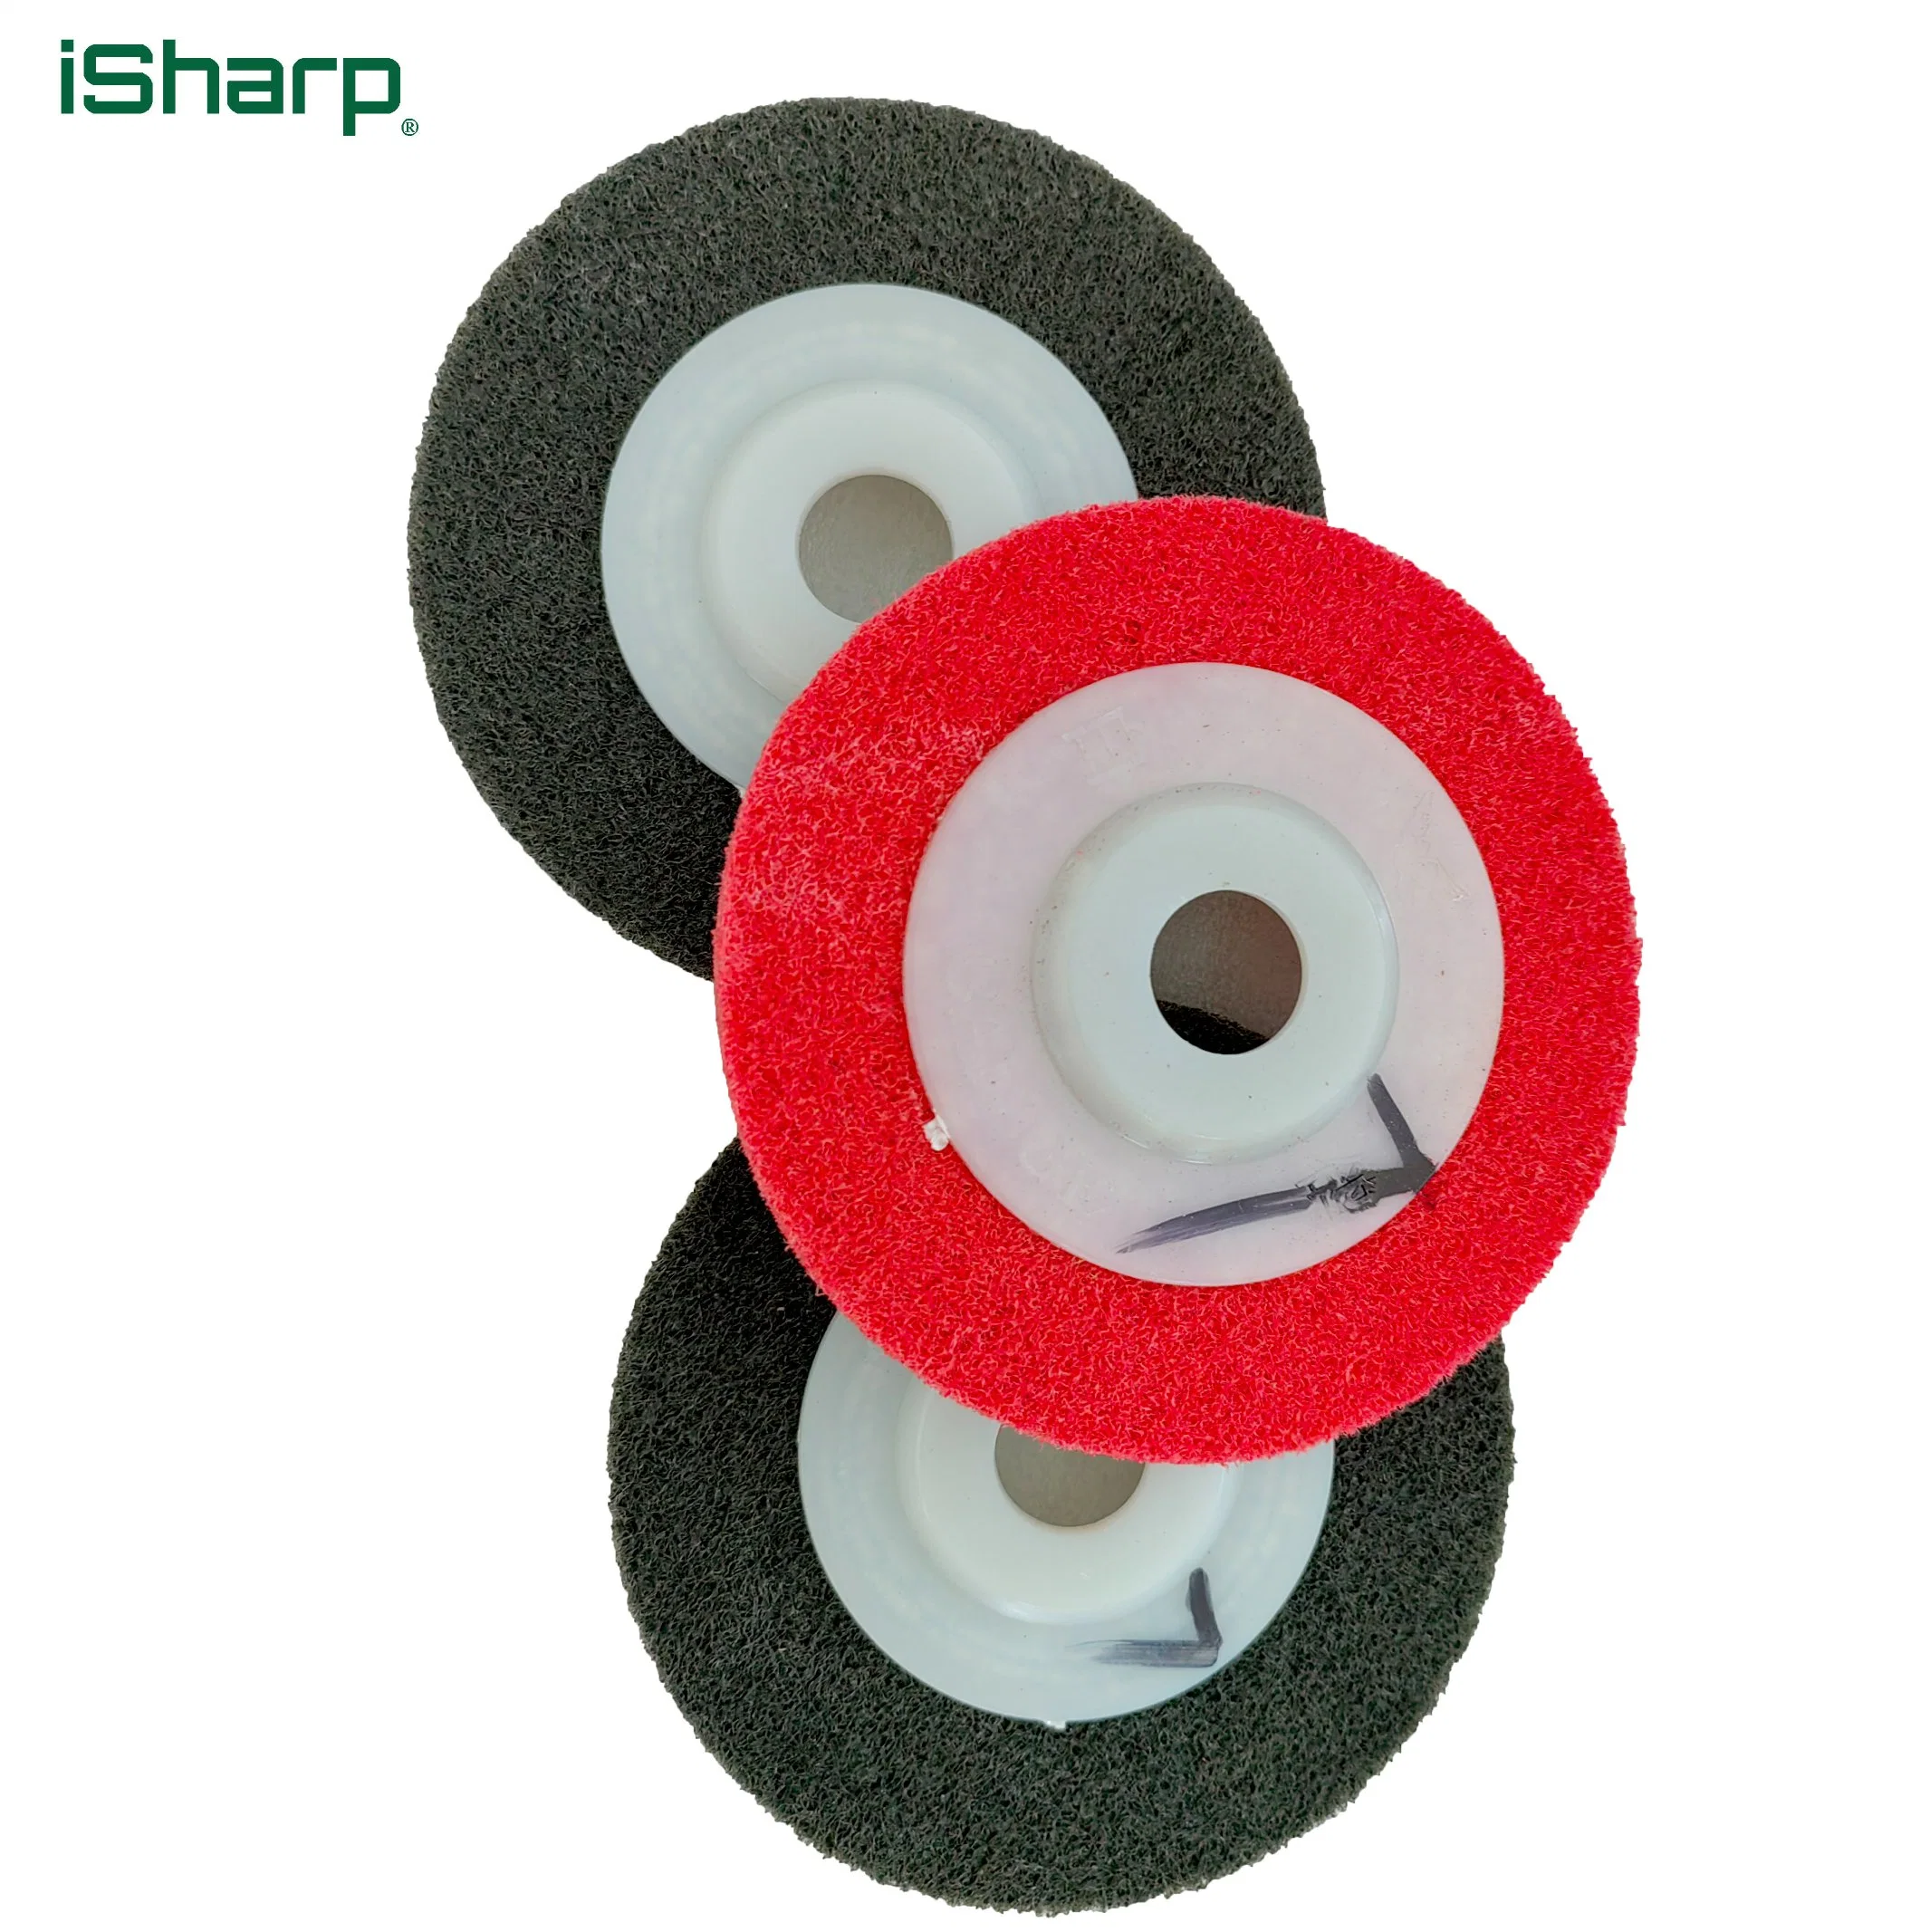 Isharp Non-Woven Grinding Wheel 4 Inch Fiber Grinding Wheel